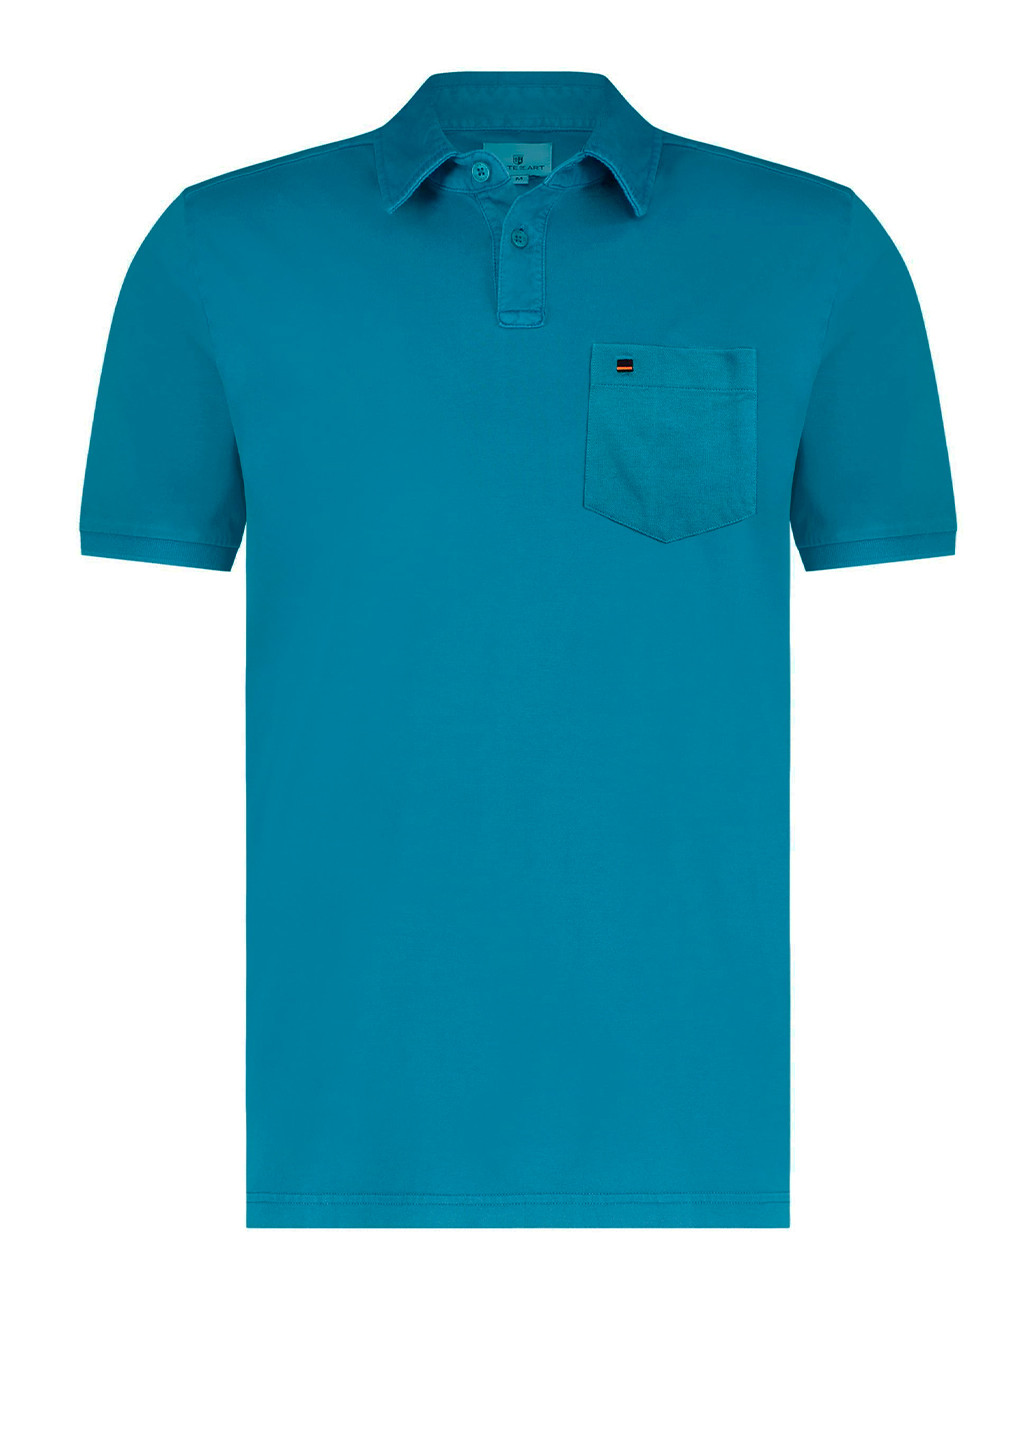 Голубой футболка-мужская футболка-поло для мужчин State of Art однотонная